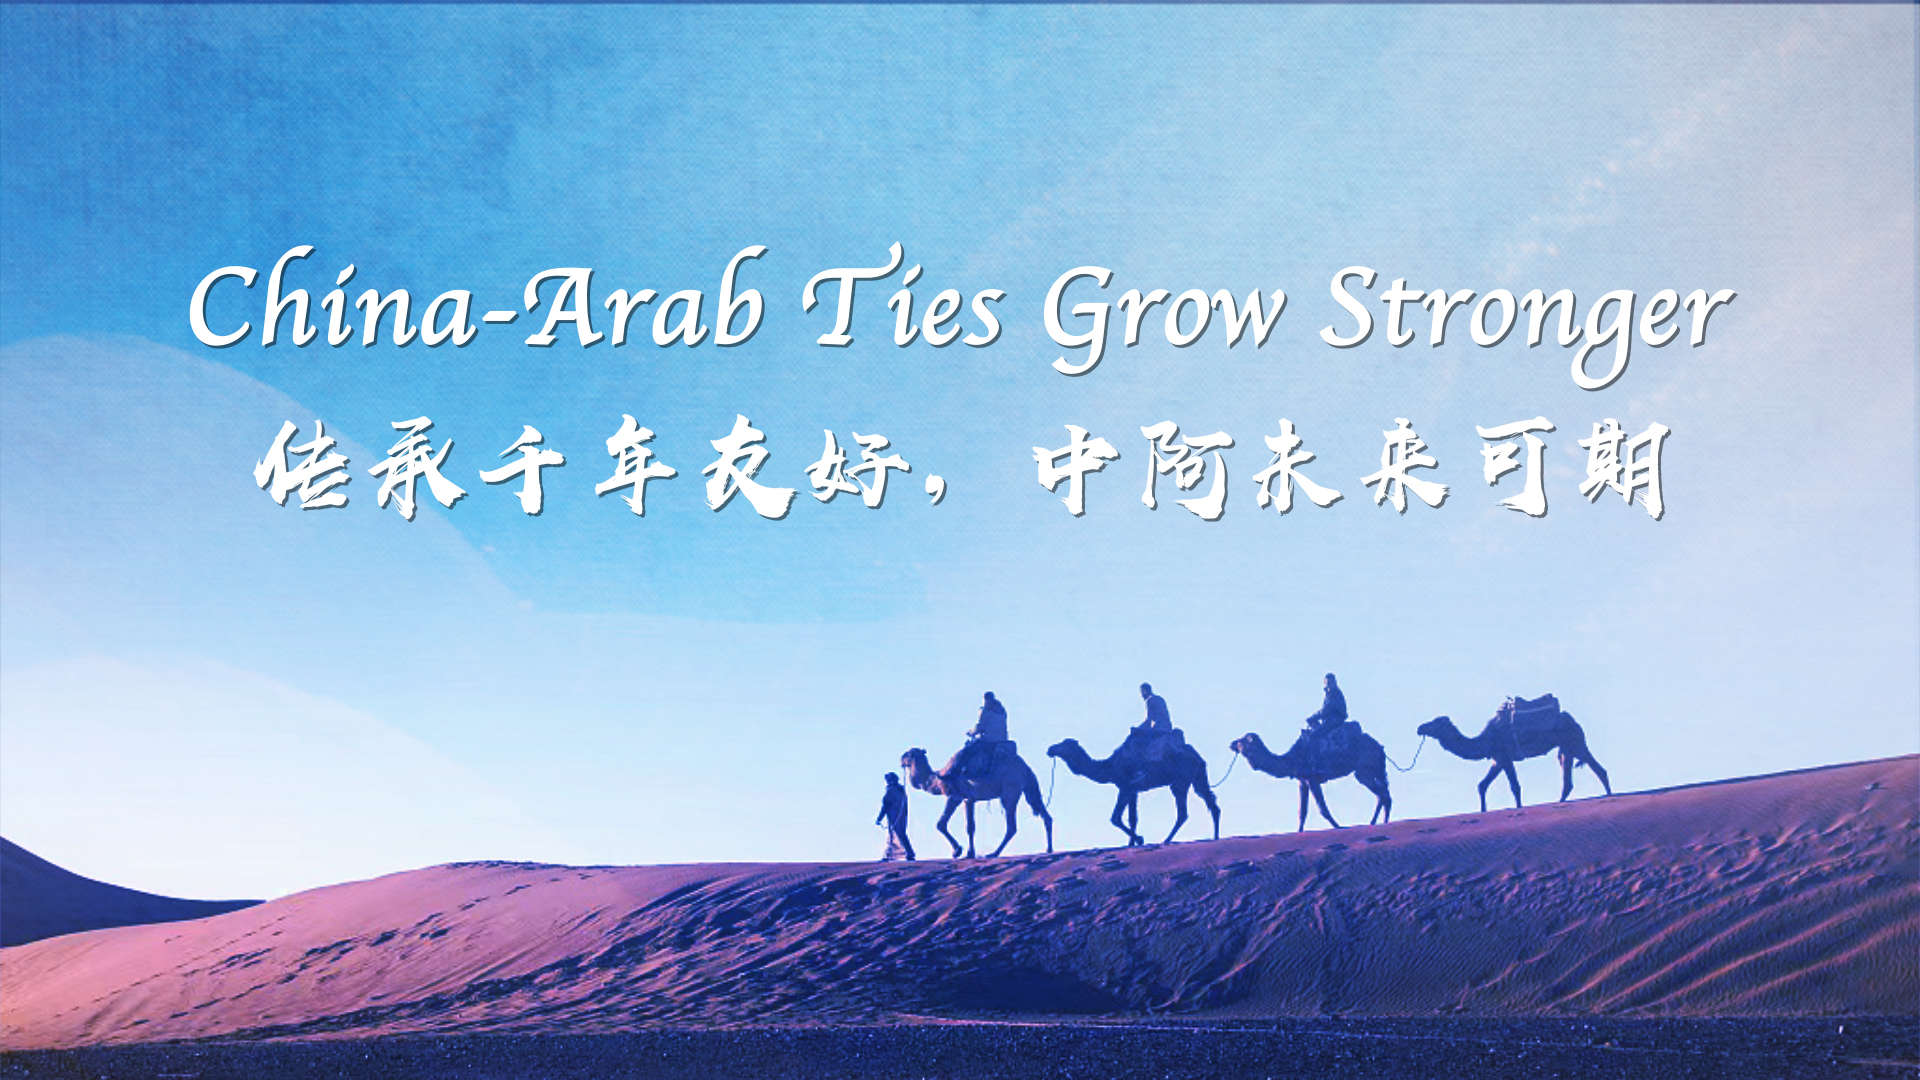 Watch: China-Arab ties grow stronger